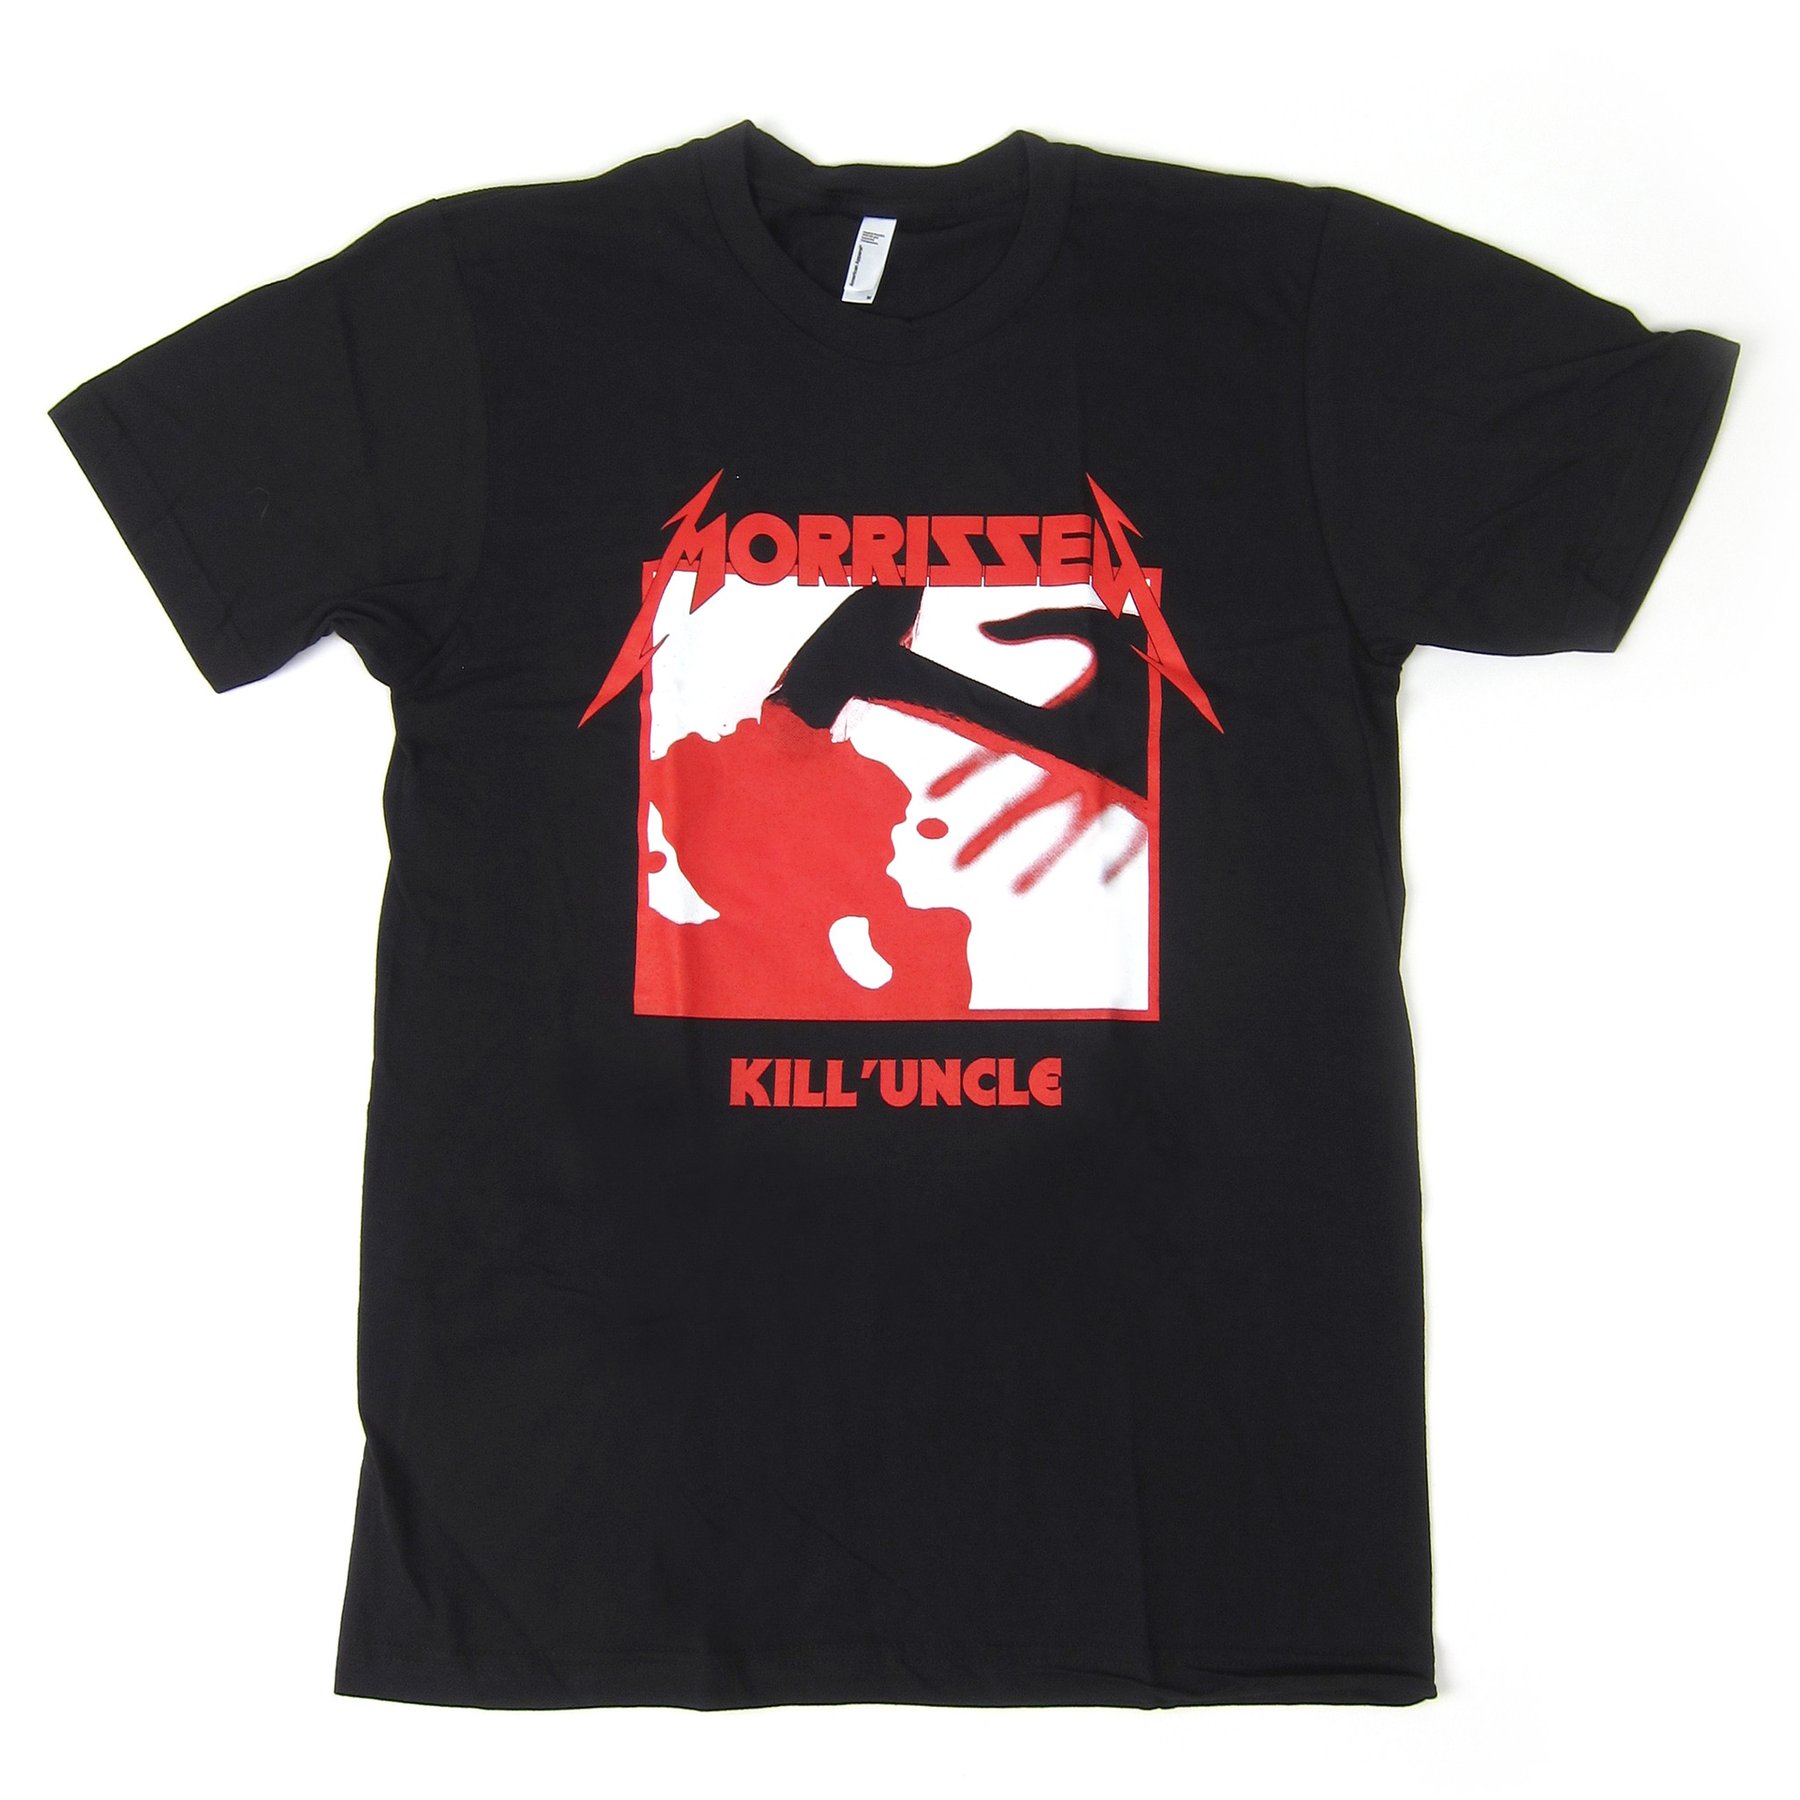 Morrissey-killuncle-shirt_1800x